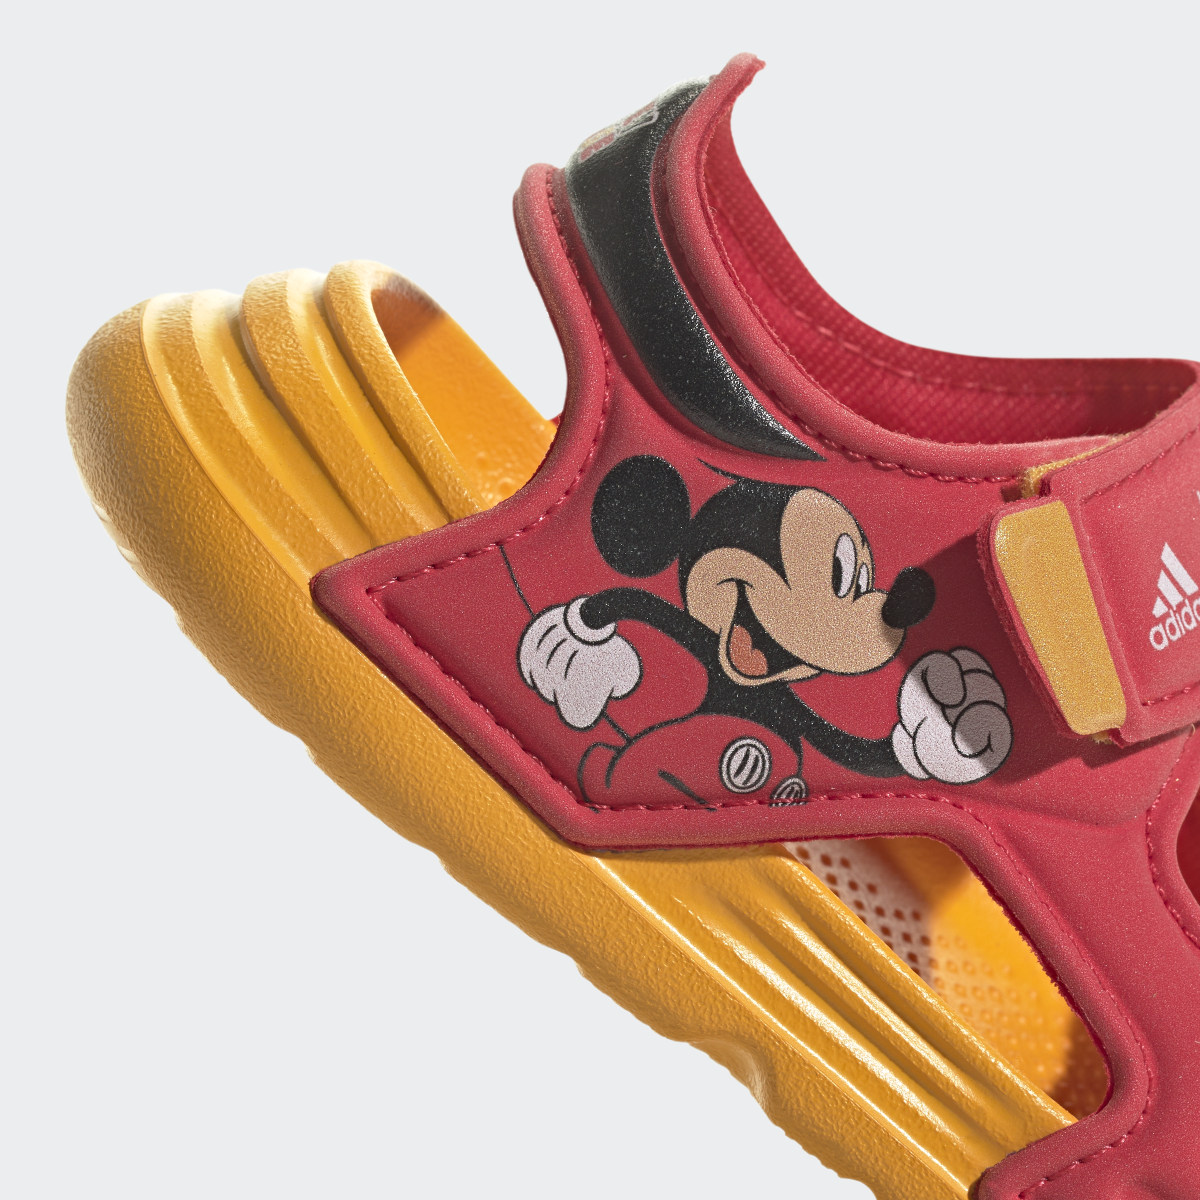 Adidas x Disney Mickey Mouse AltaSwim Sandals. 9